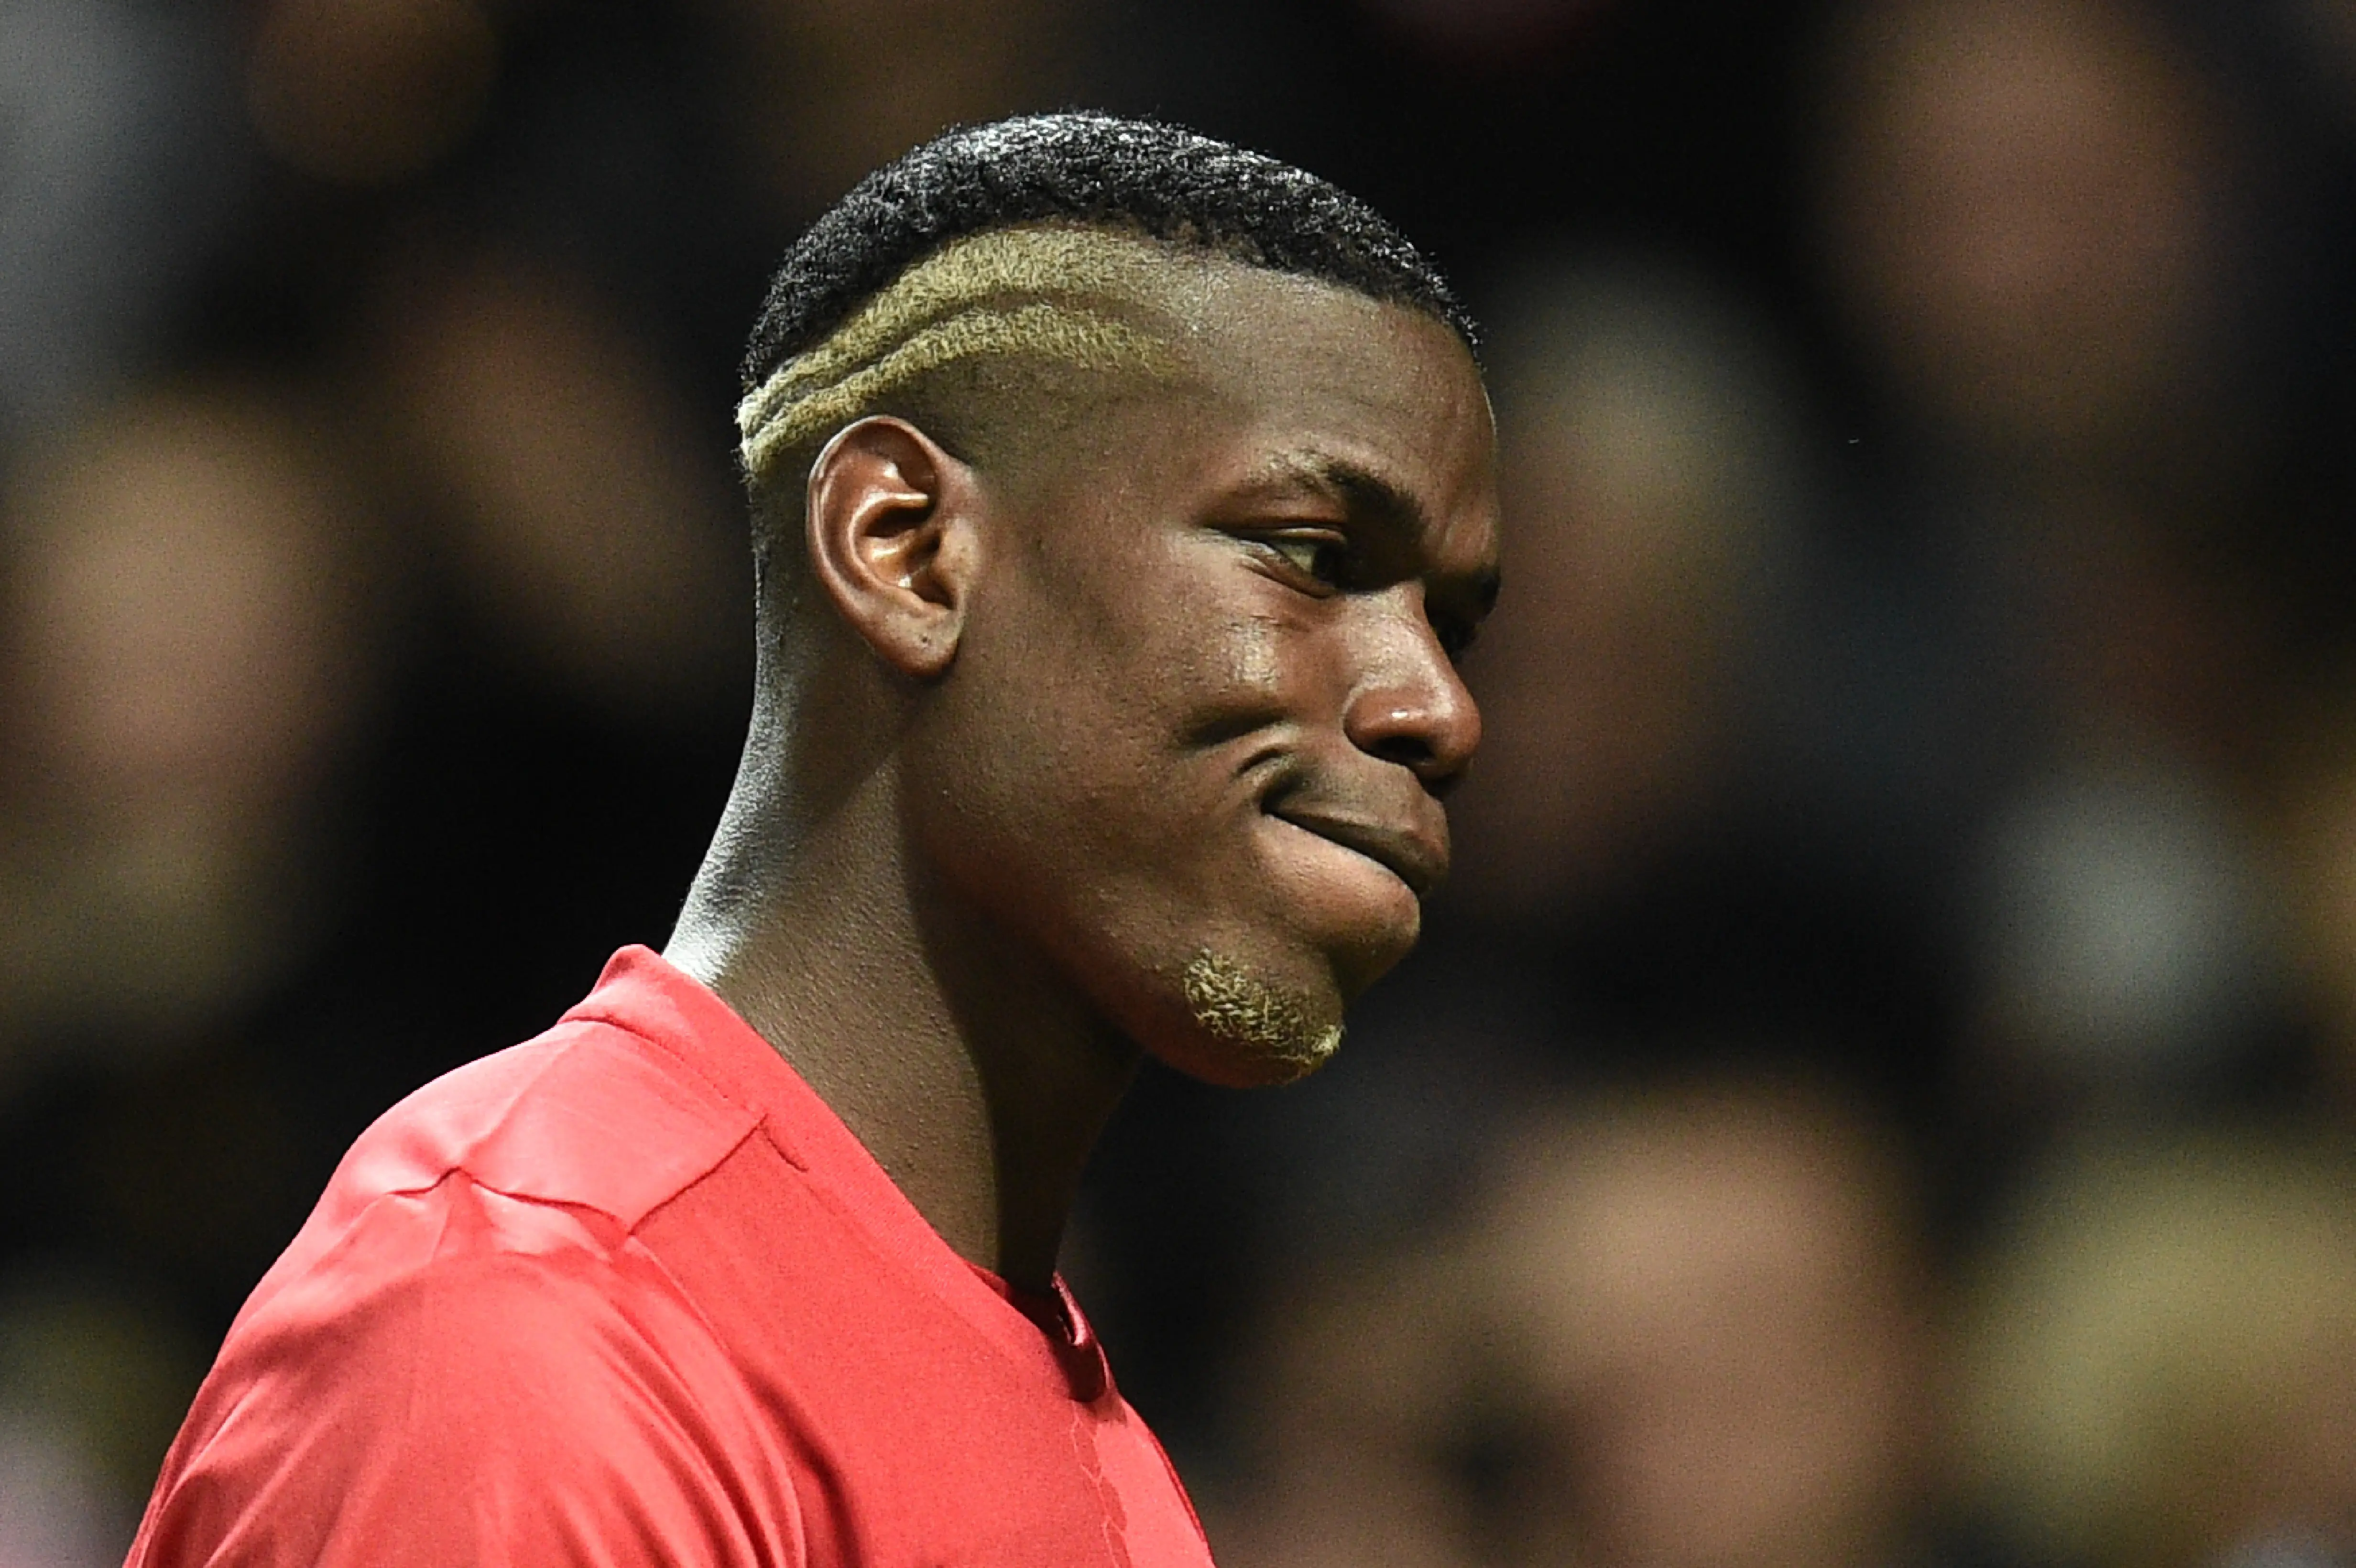 Gelandang jangkar Manchester United (MU) Paul Pogba. (Oli SCARFF / AFP)